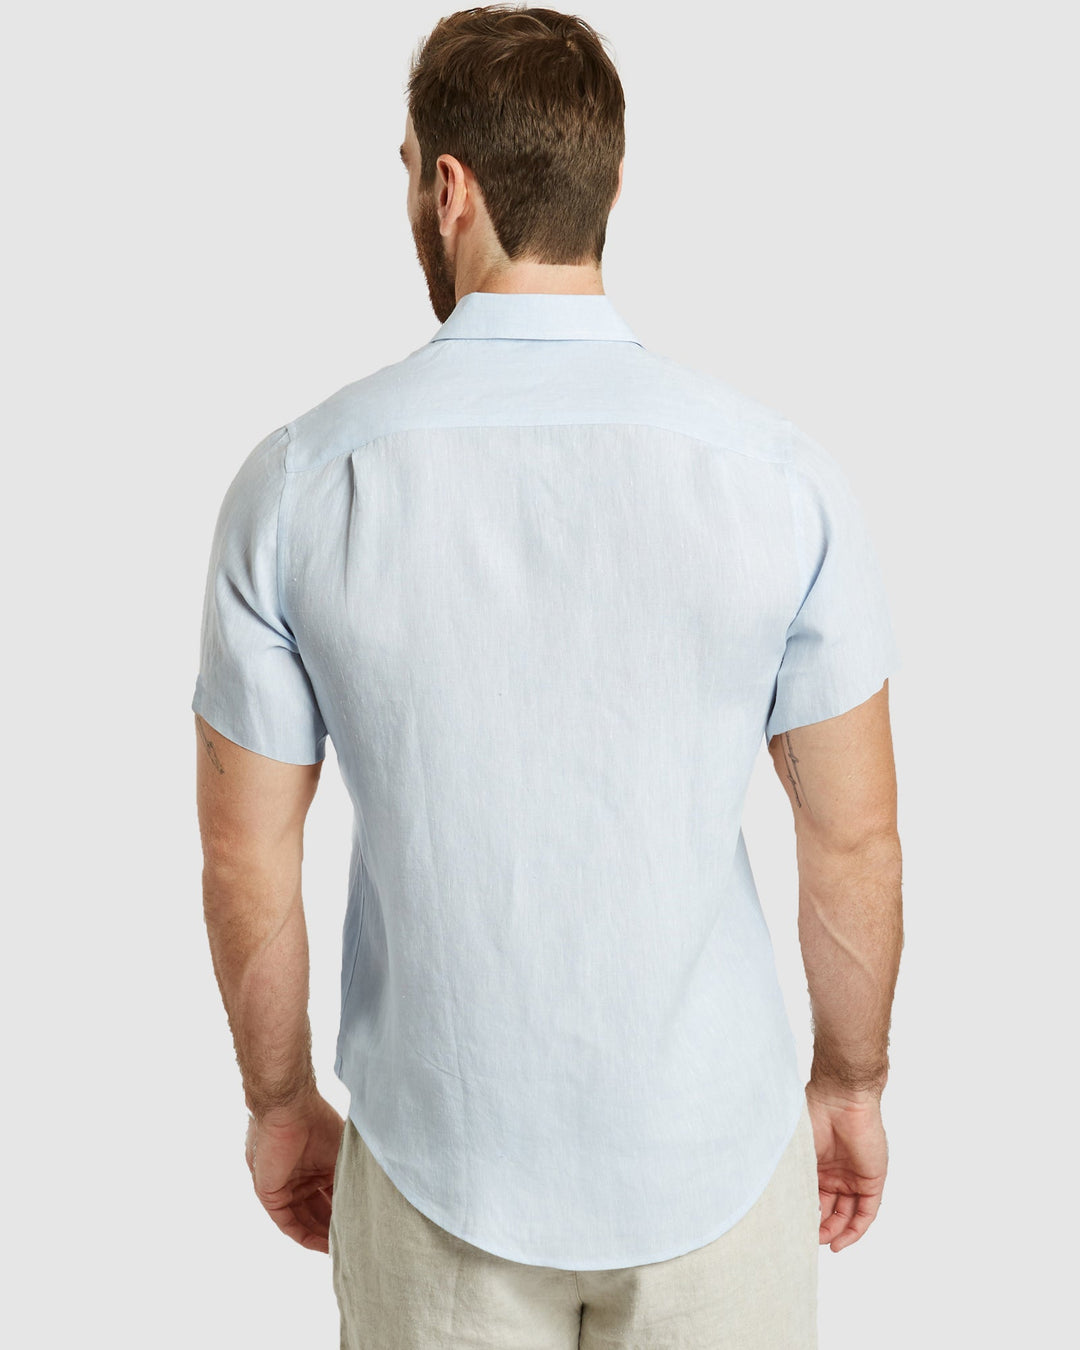 Ravello No Tuck Sky SS Linen Shirt - Slim Fit